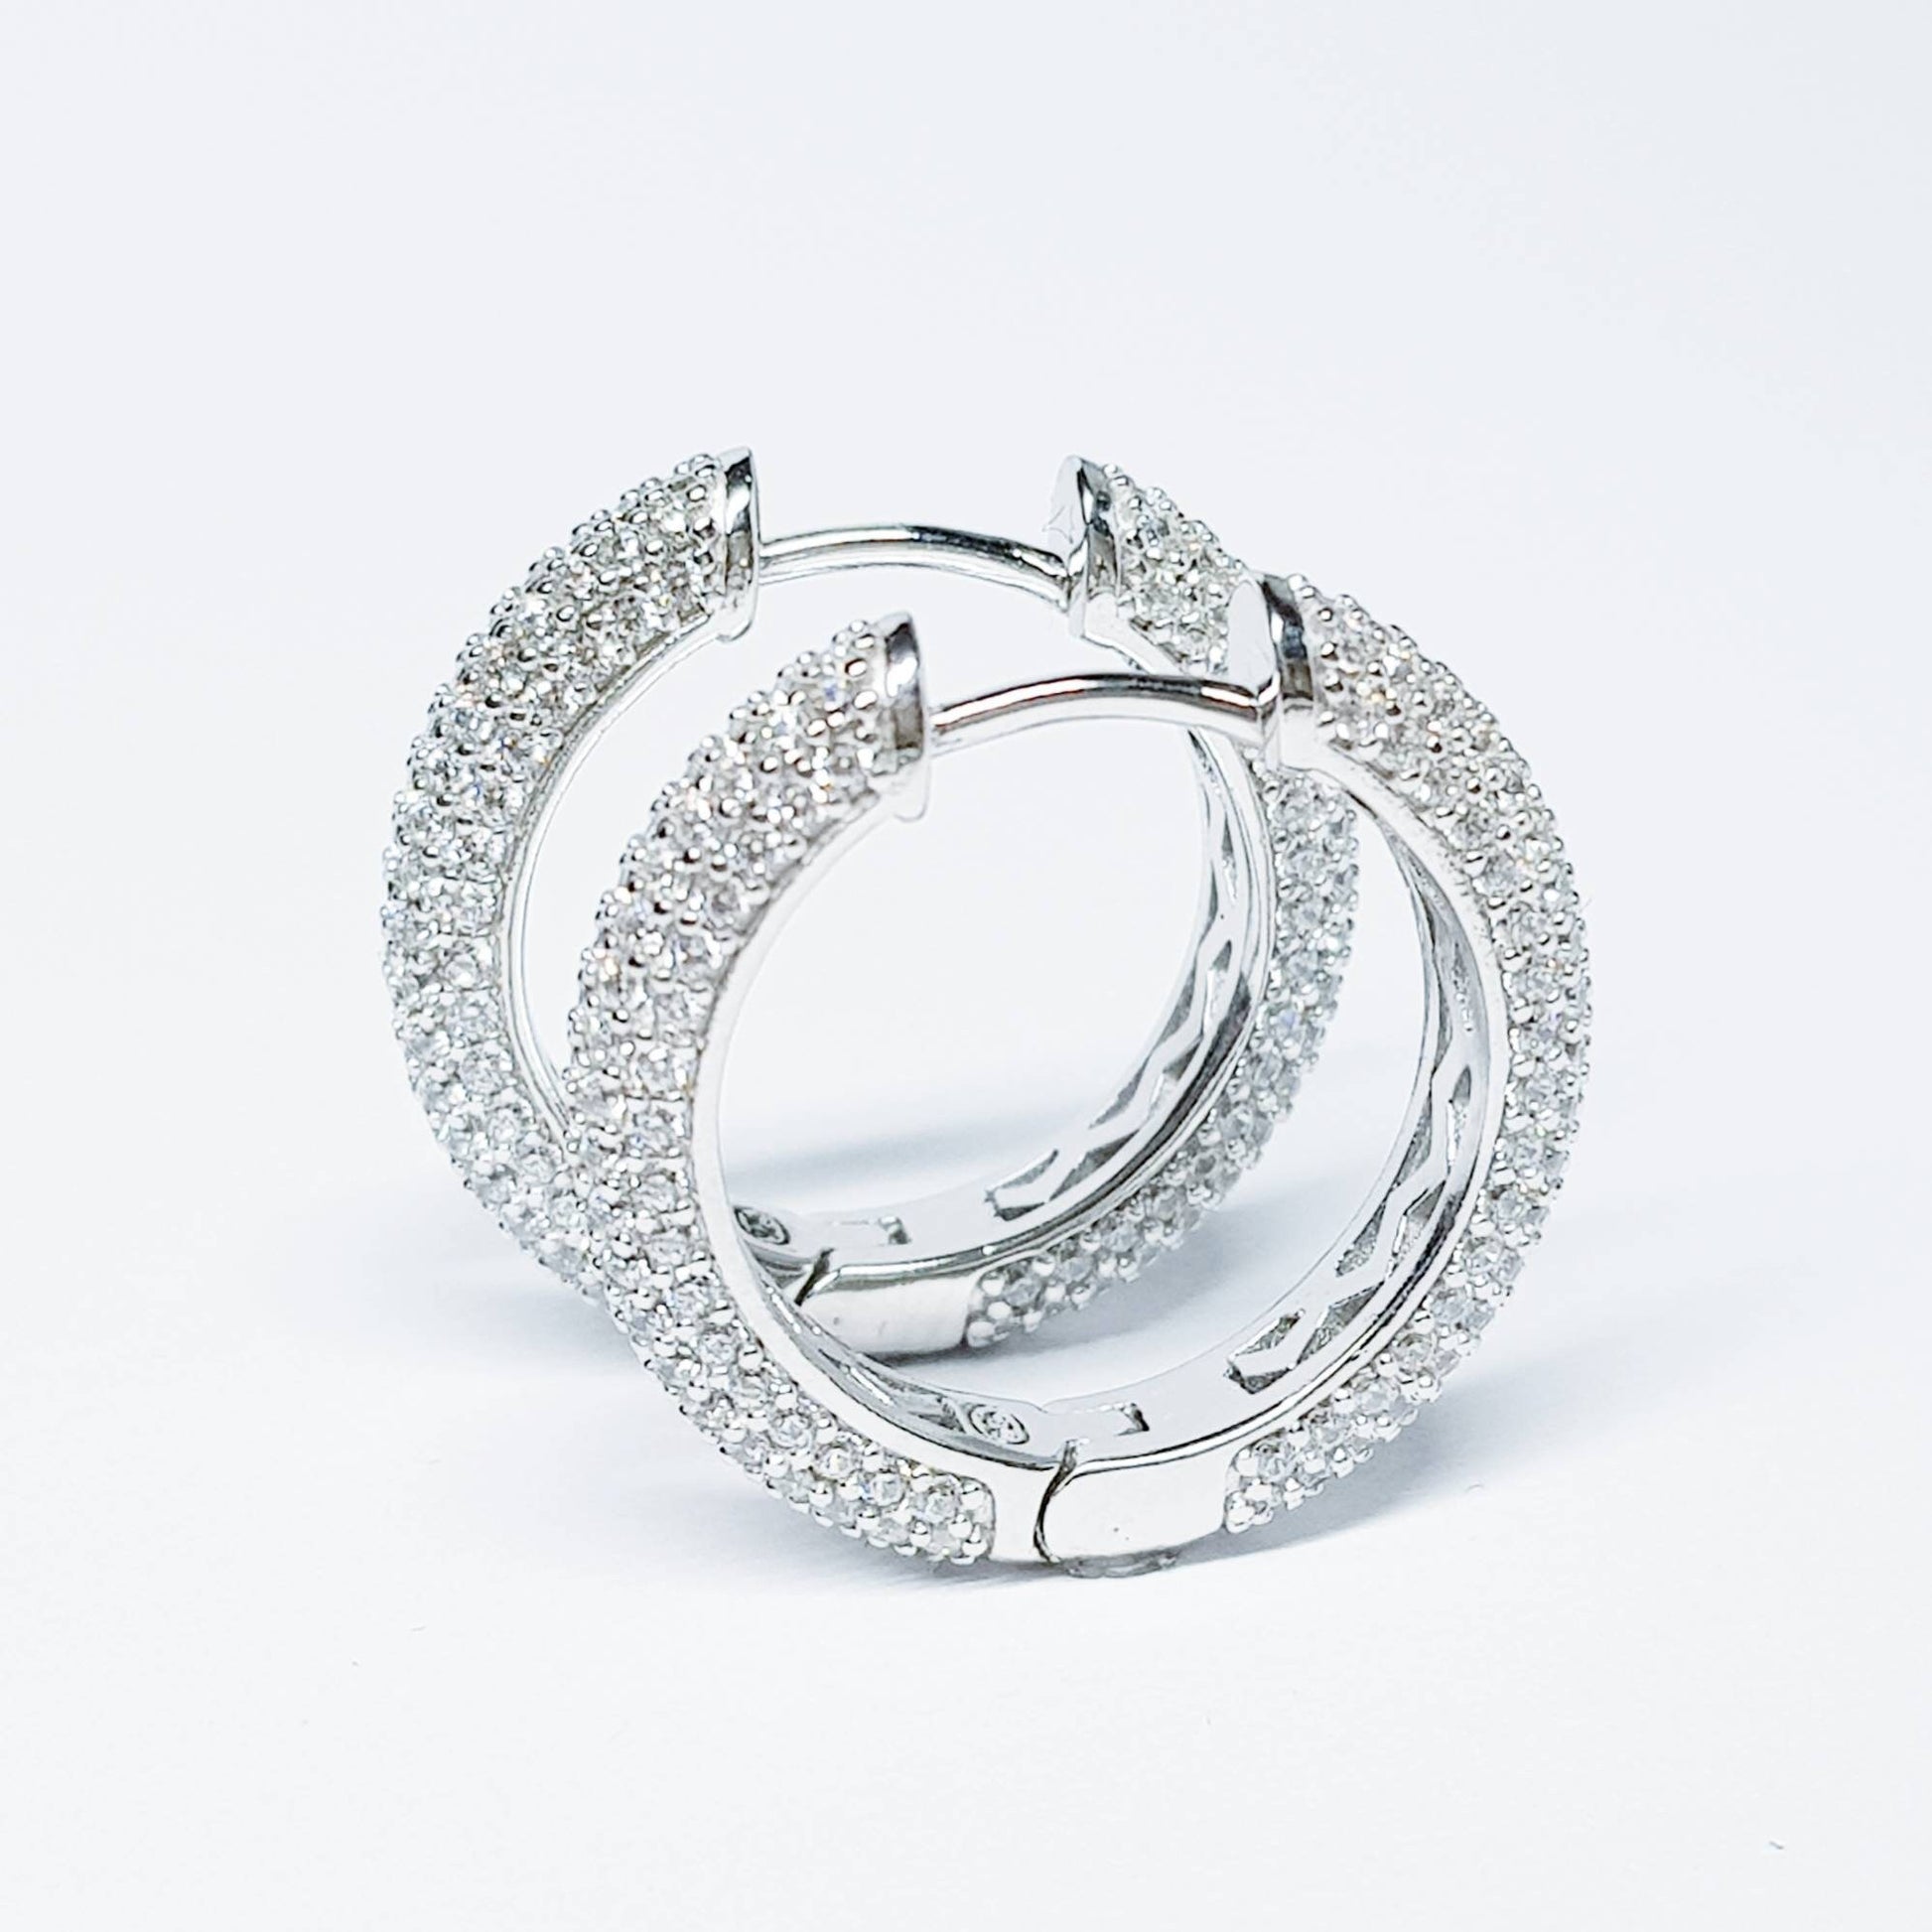 Sterling silver cz encrusted hoop earrings, lever back diamond hoops, luxurious dress jewelry